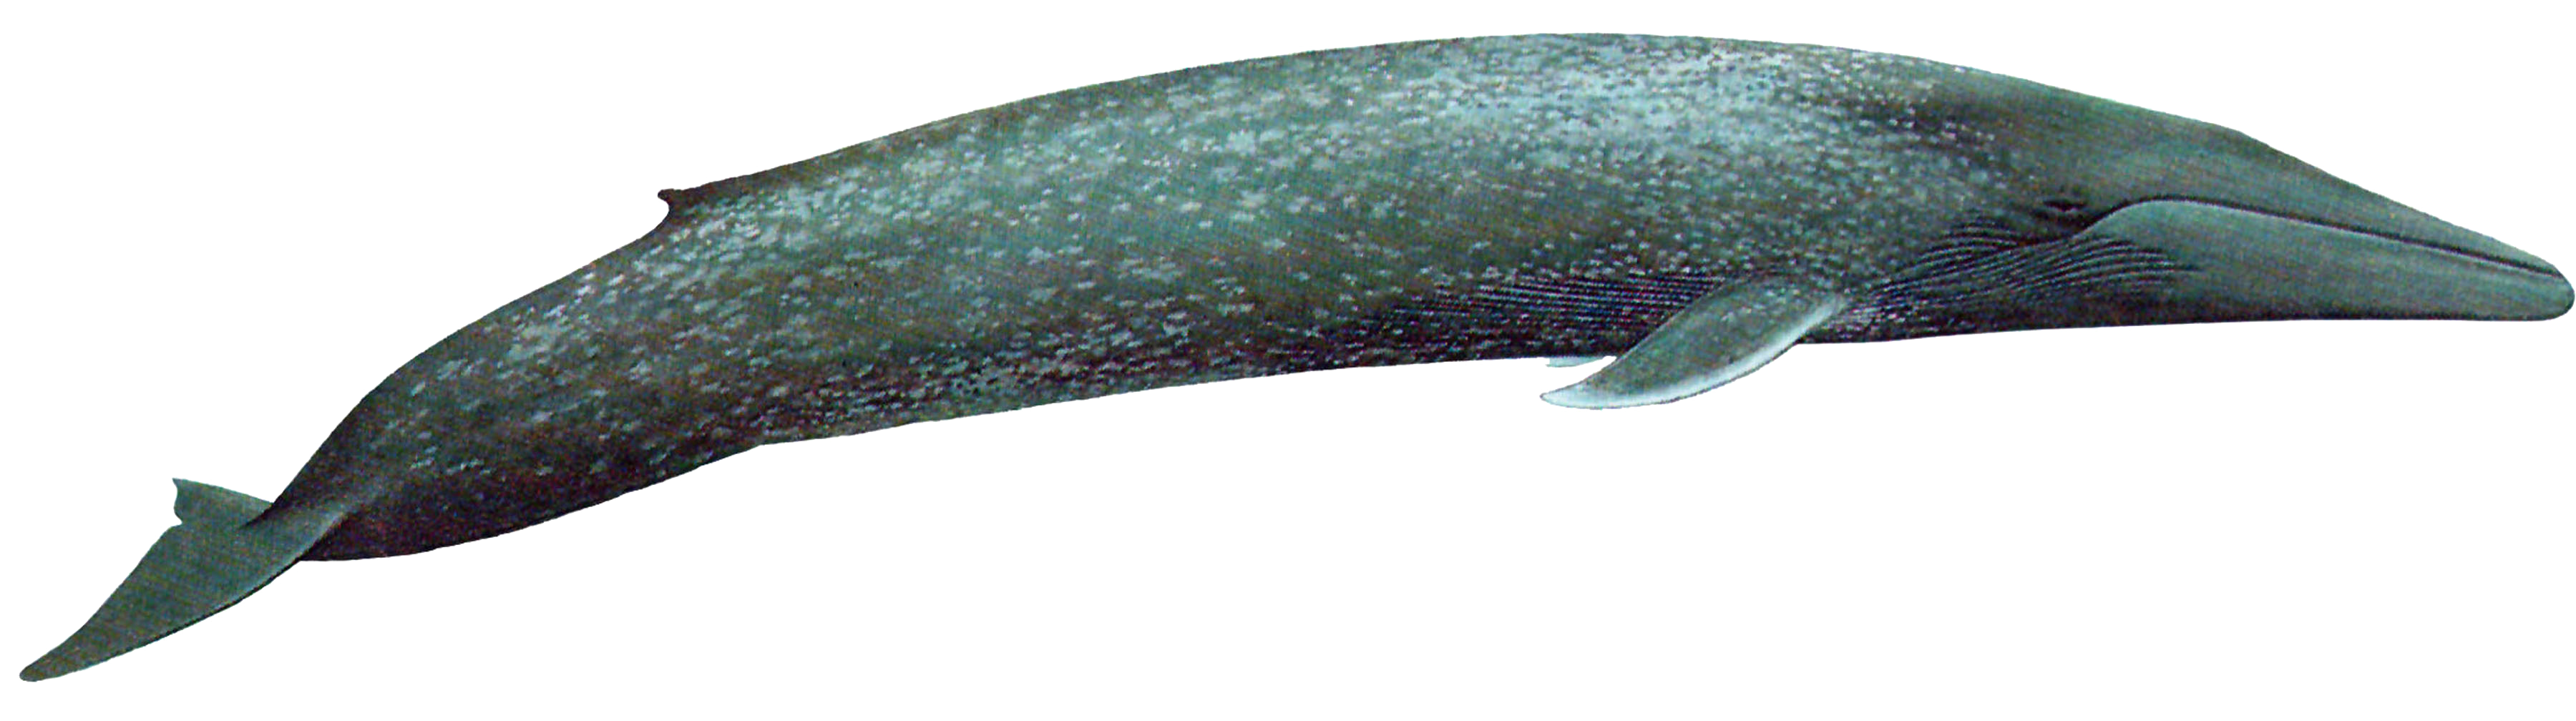 Baleine bleue PNG Transparent Image